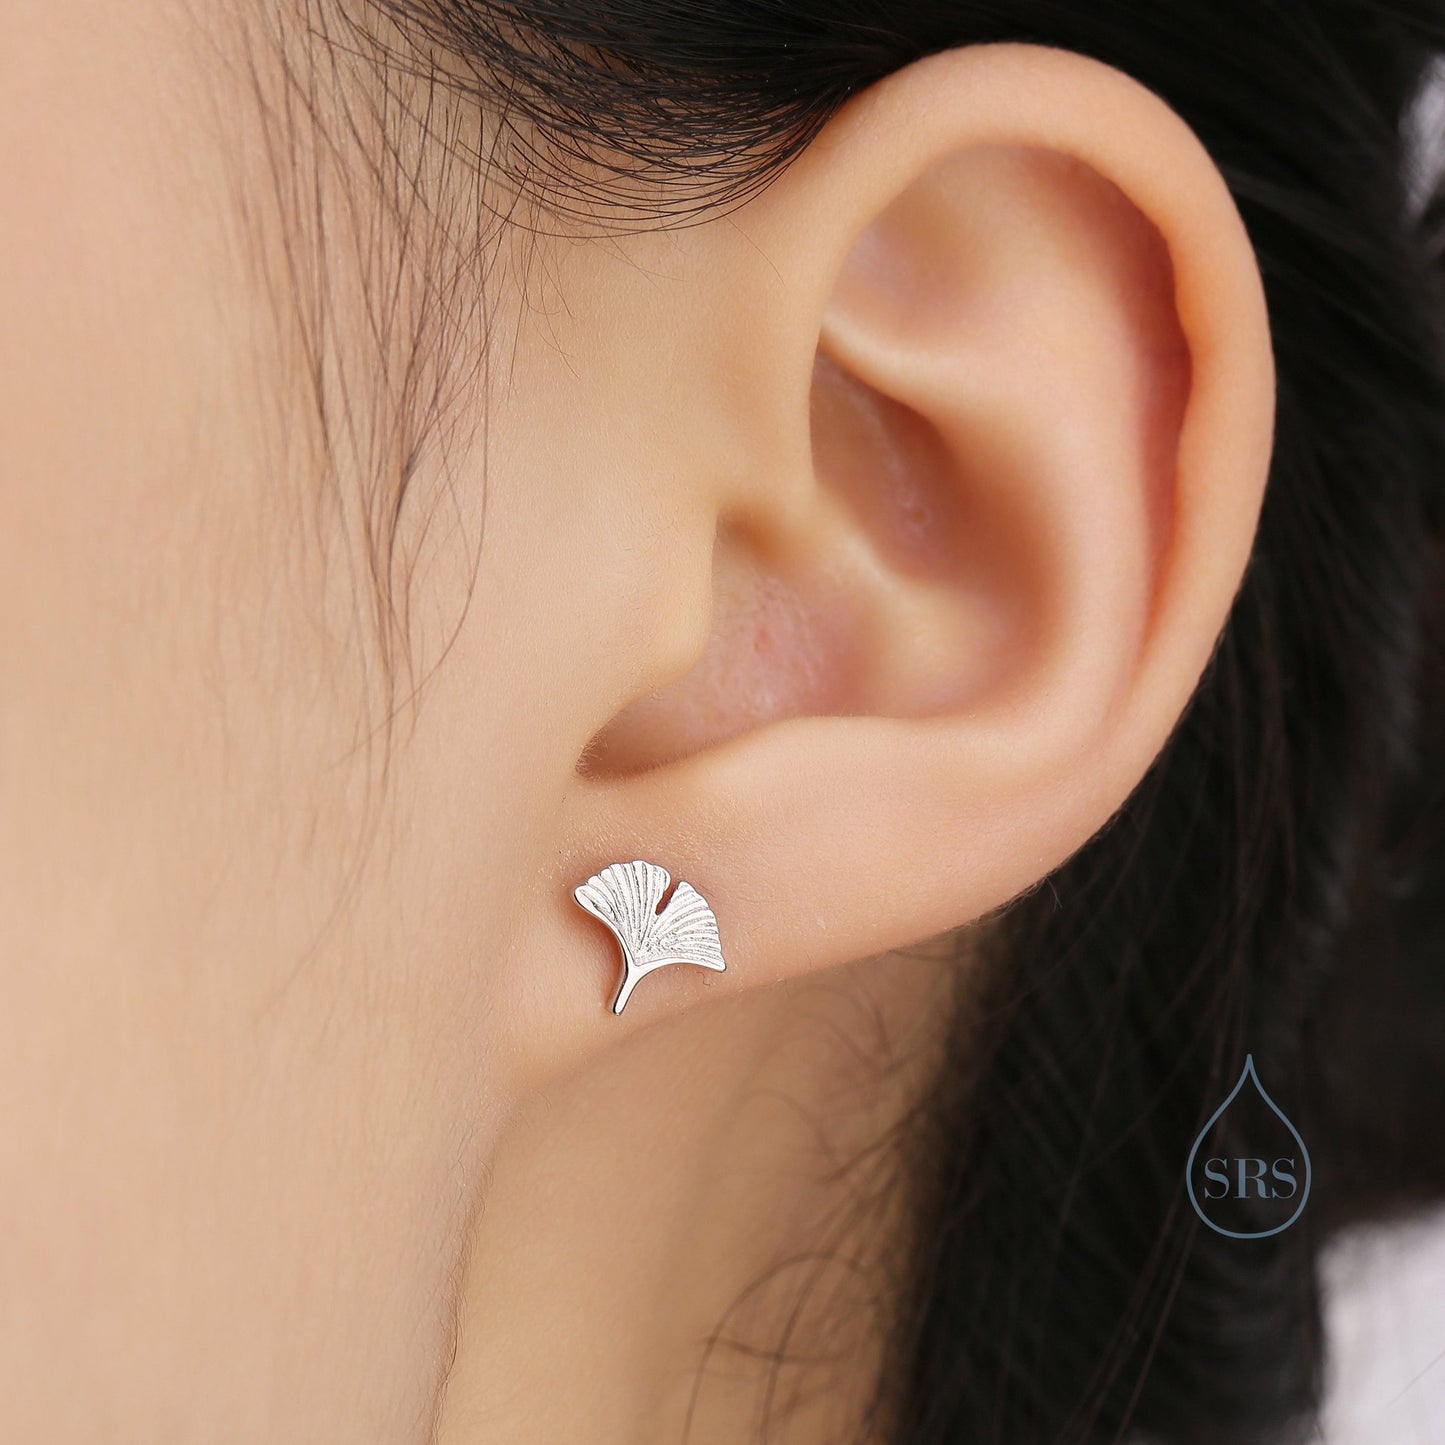 Tiny Ginkgo Leaf Stud Earrings in Sterling Silver, Silver, Gold or Rose Gold, Small Leaf Earrings, Cute Leaf Earrings